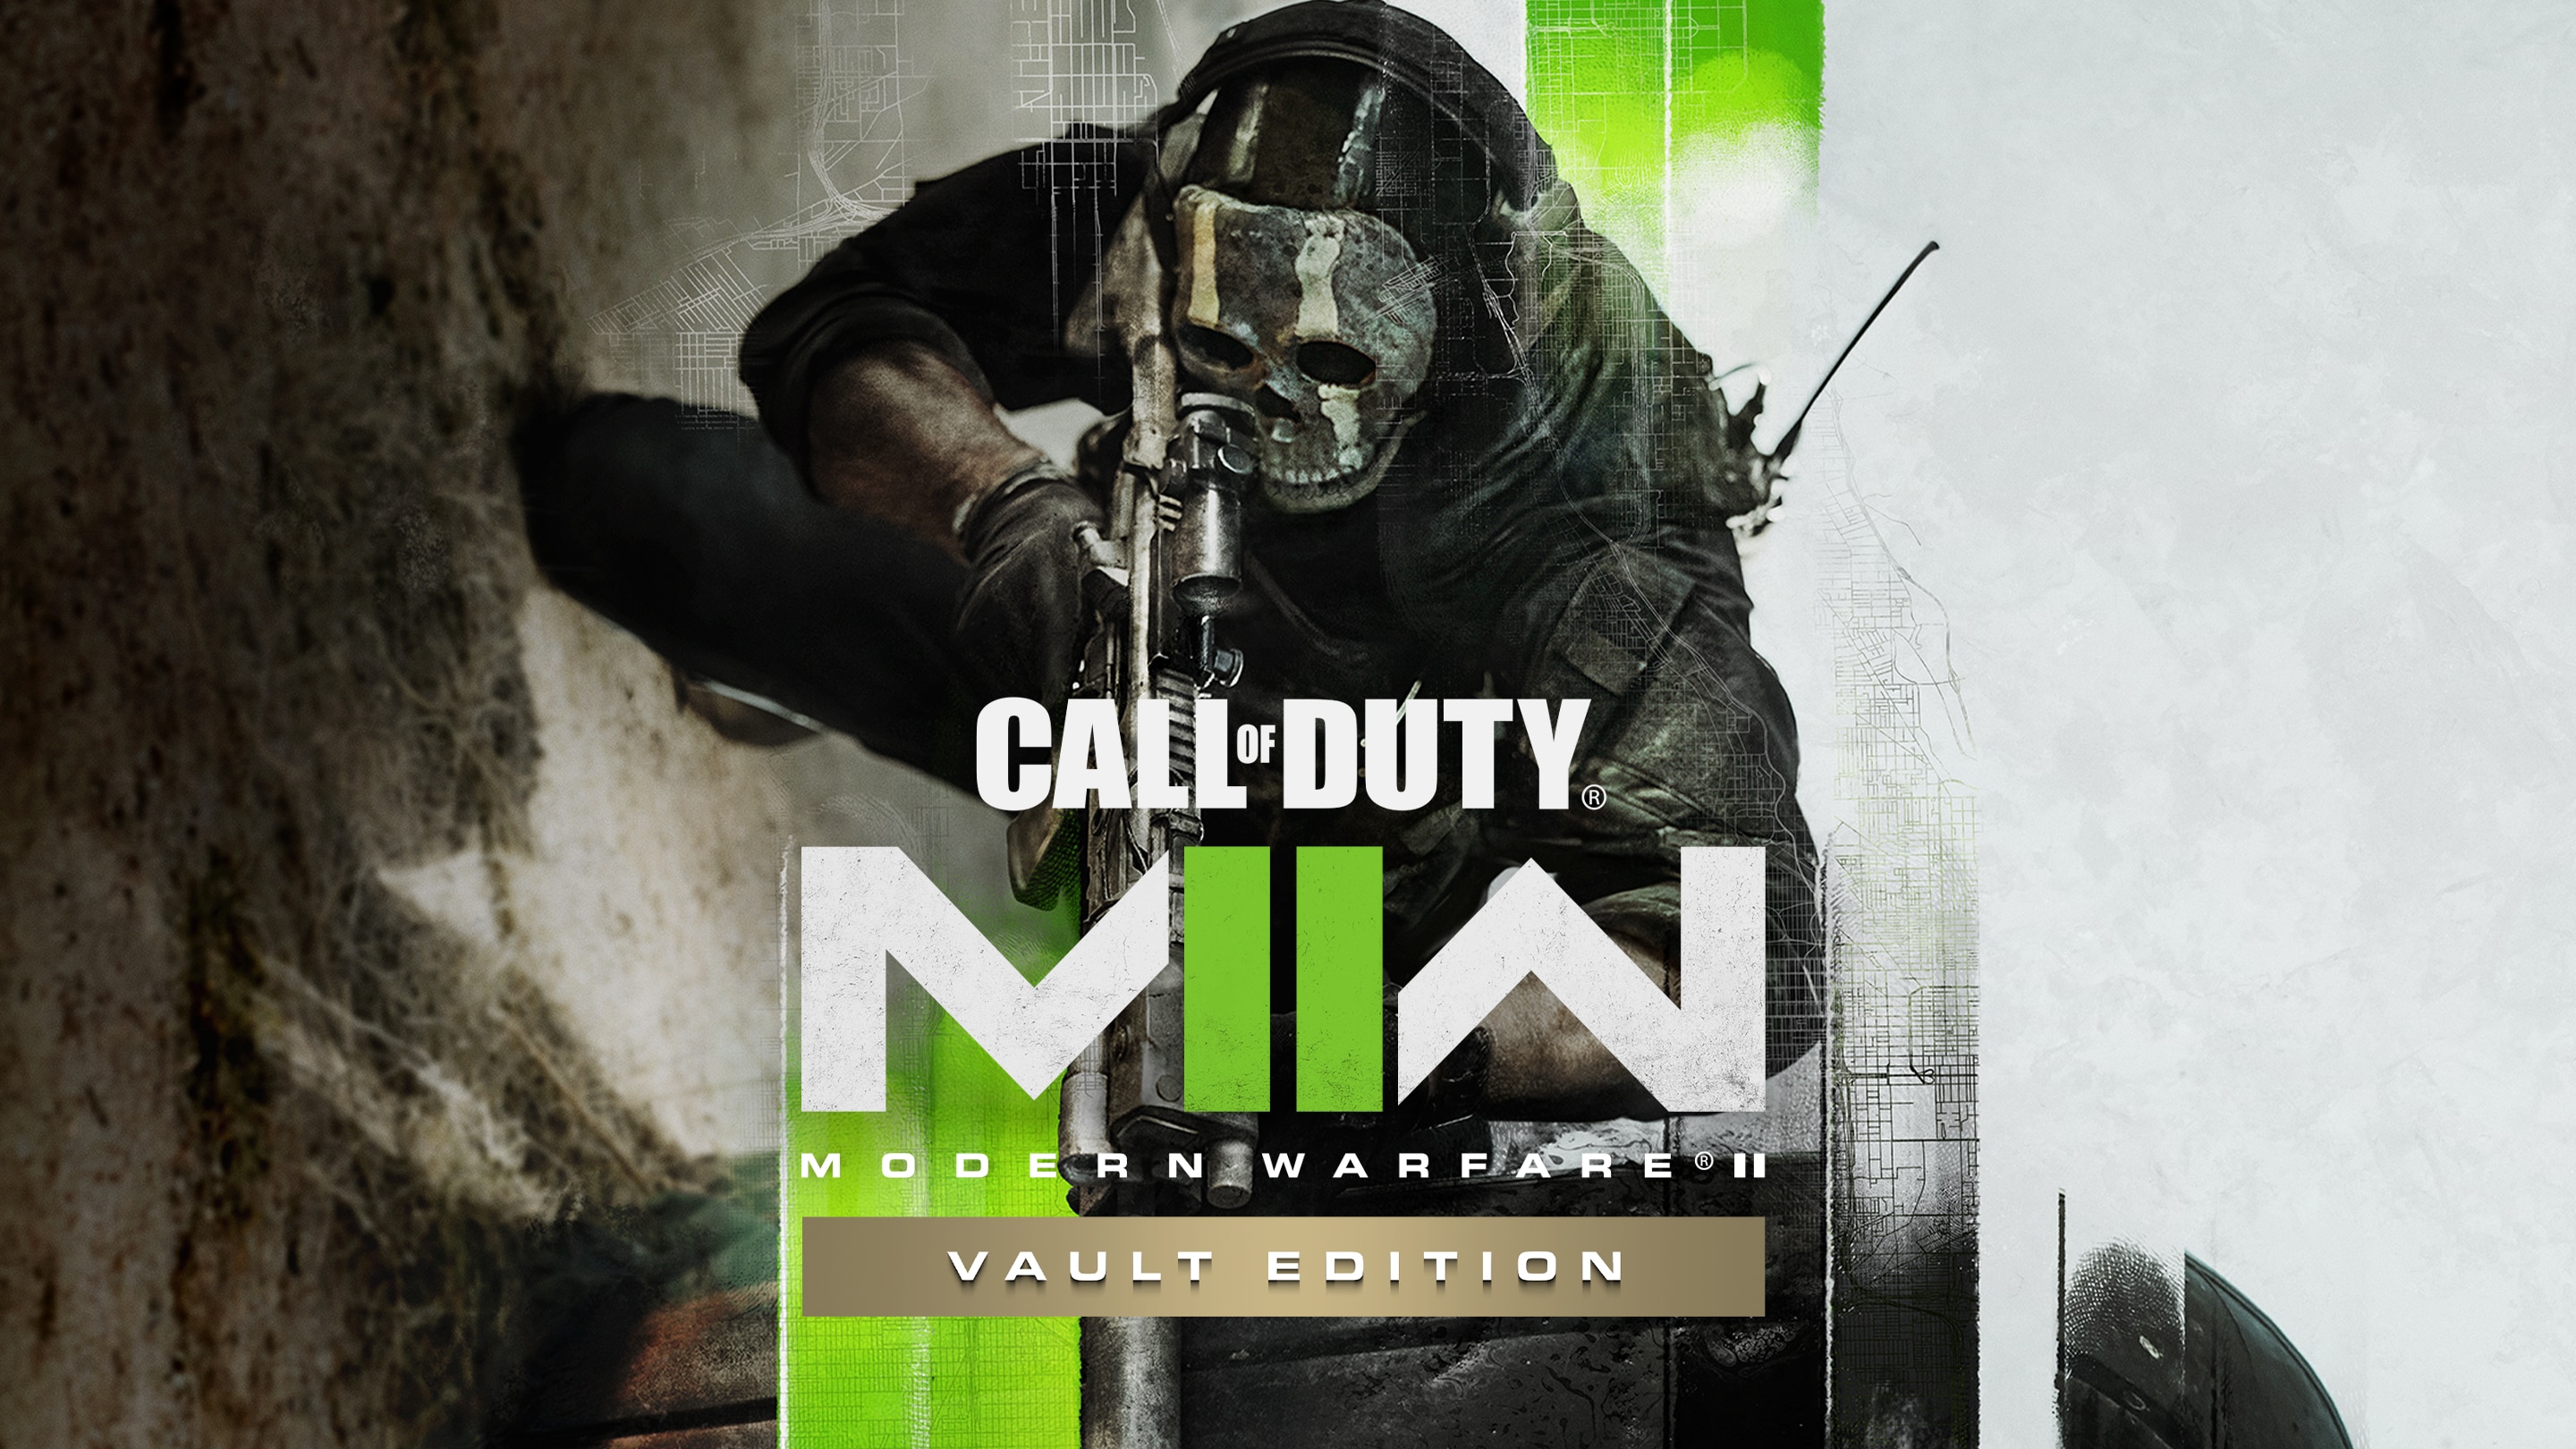 Call of Duty: Advanced Warfare Gold Edition Xbox (ARG)